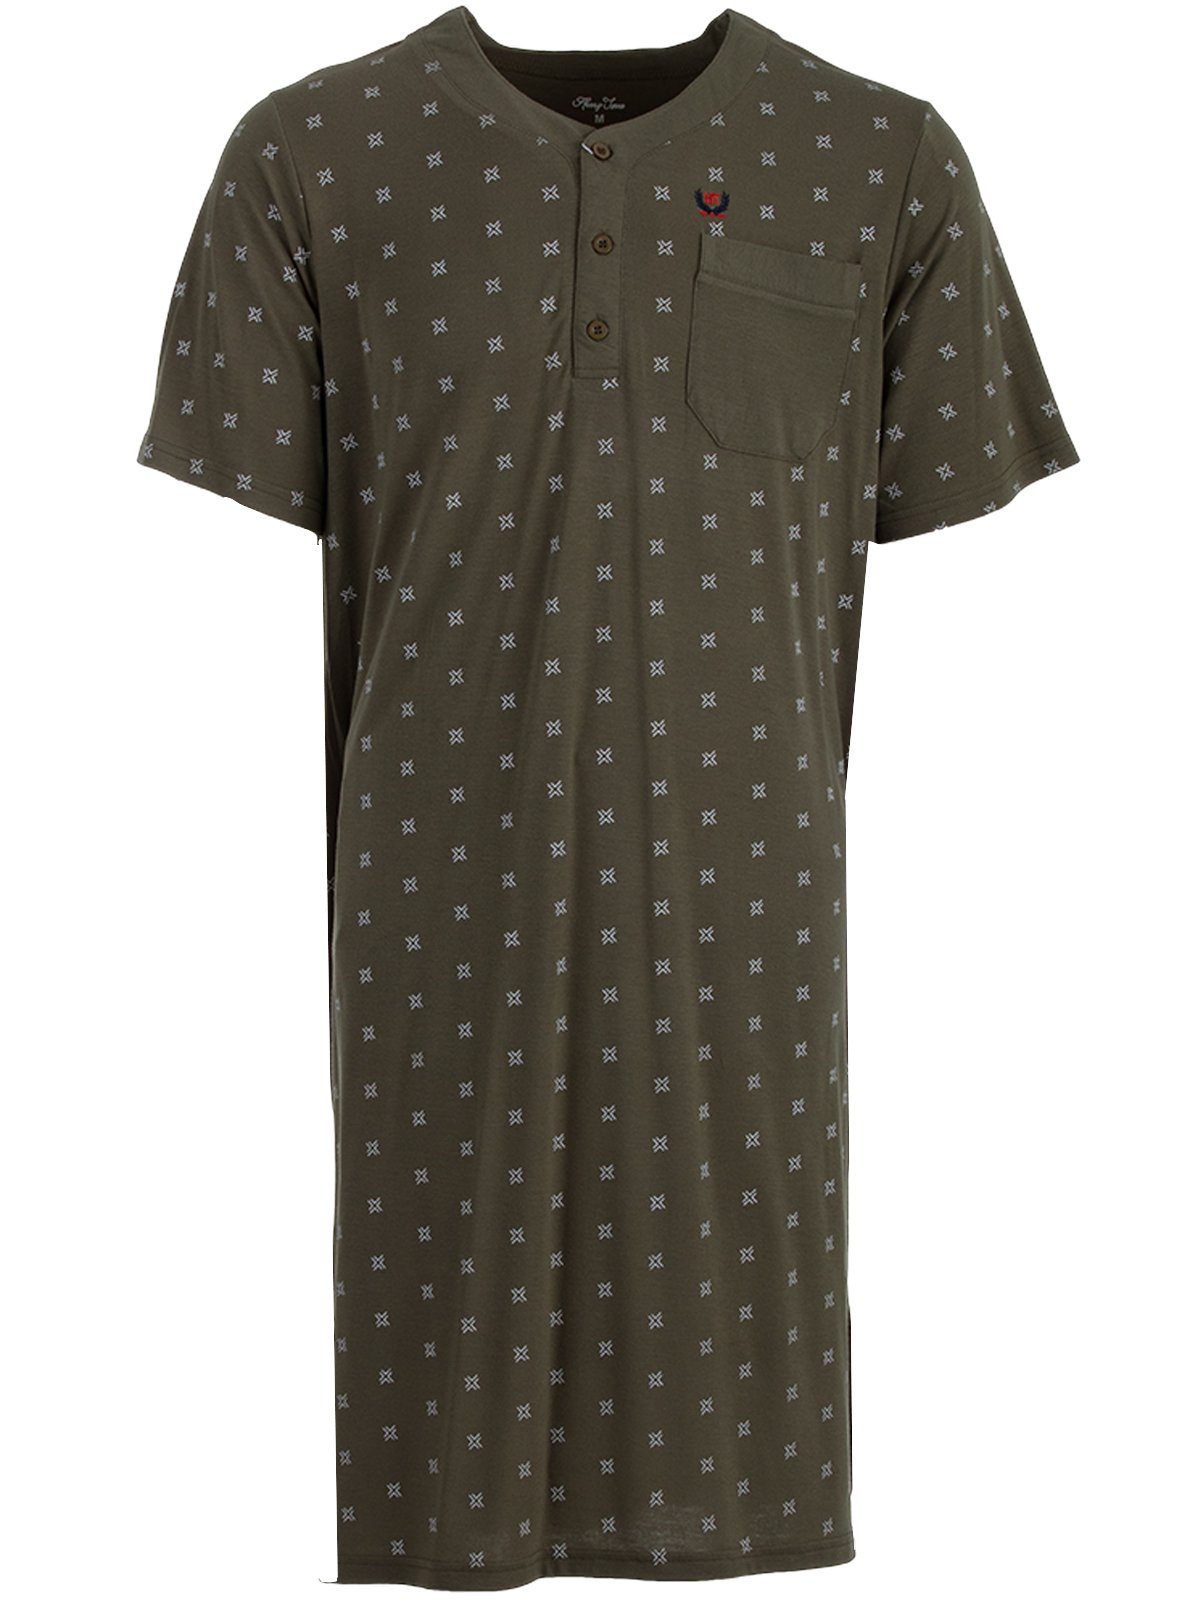 Henry Terre Nachthemd Nachthemd Kurzarm - Kreuz olive